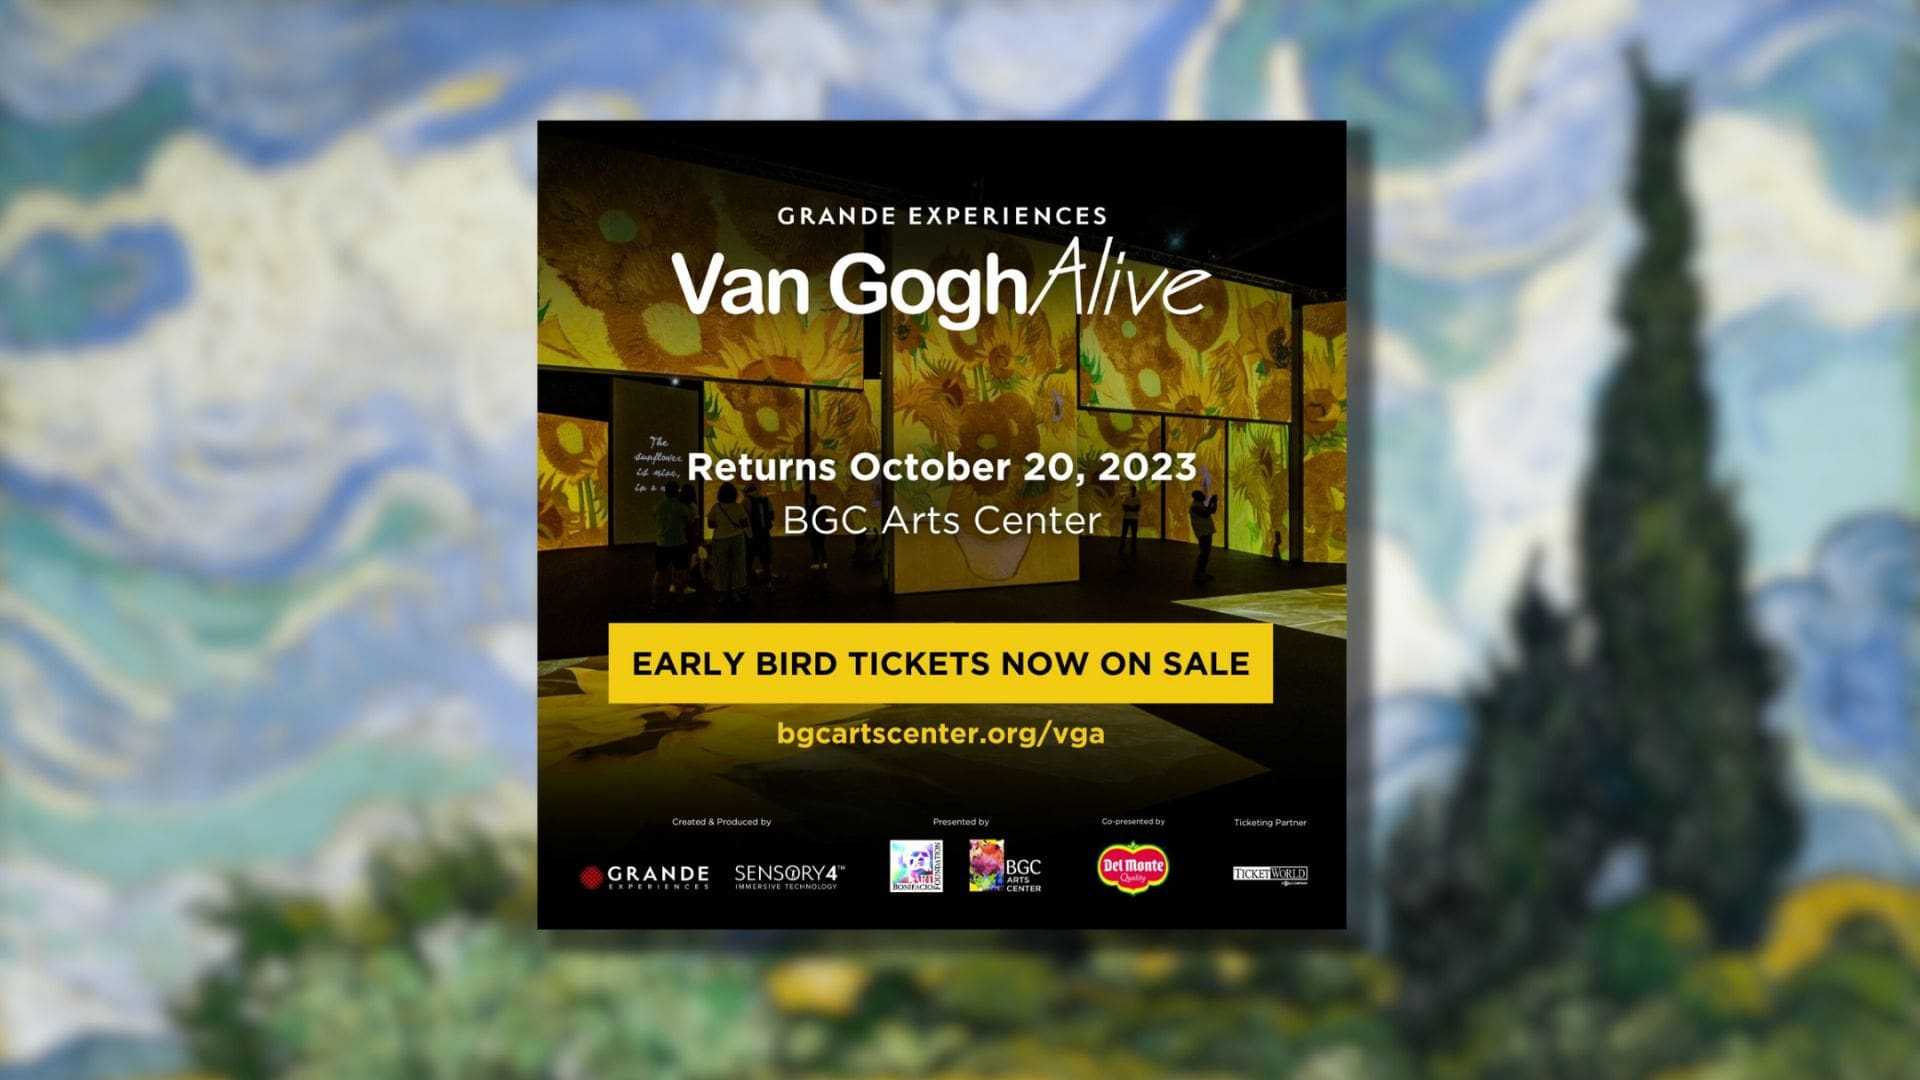 ‘Van Gogh Alive’ tickets now available, exhibit to open in October